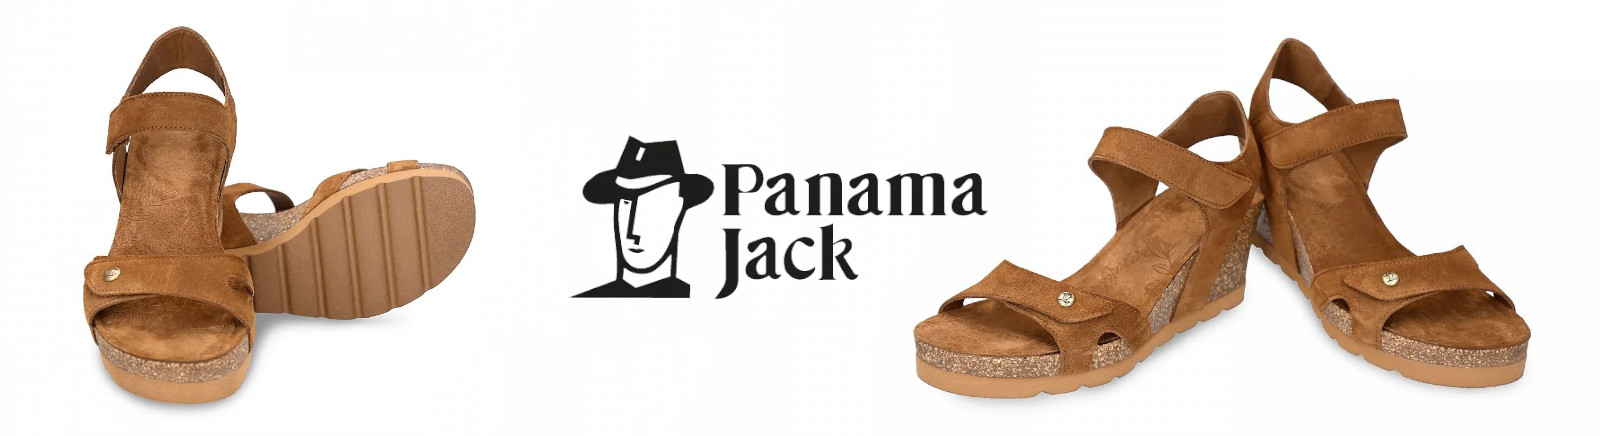 Prange: Panama Jack Winterschuhe für Damen online shoppen